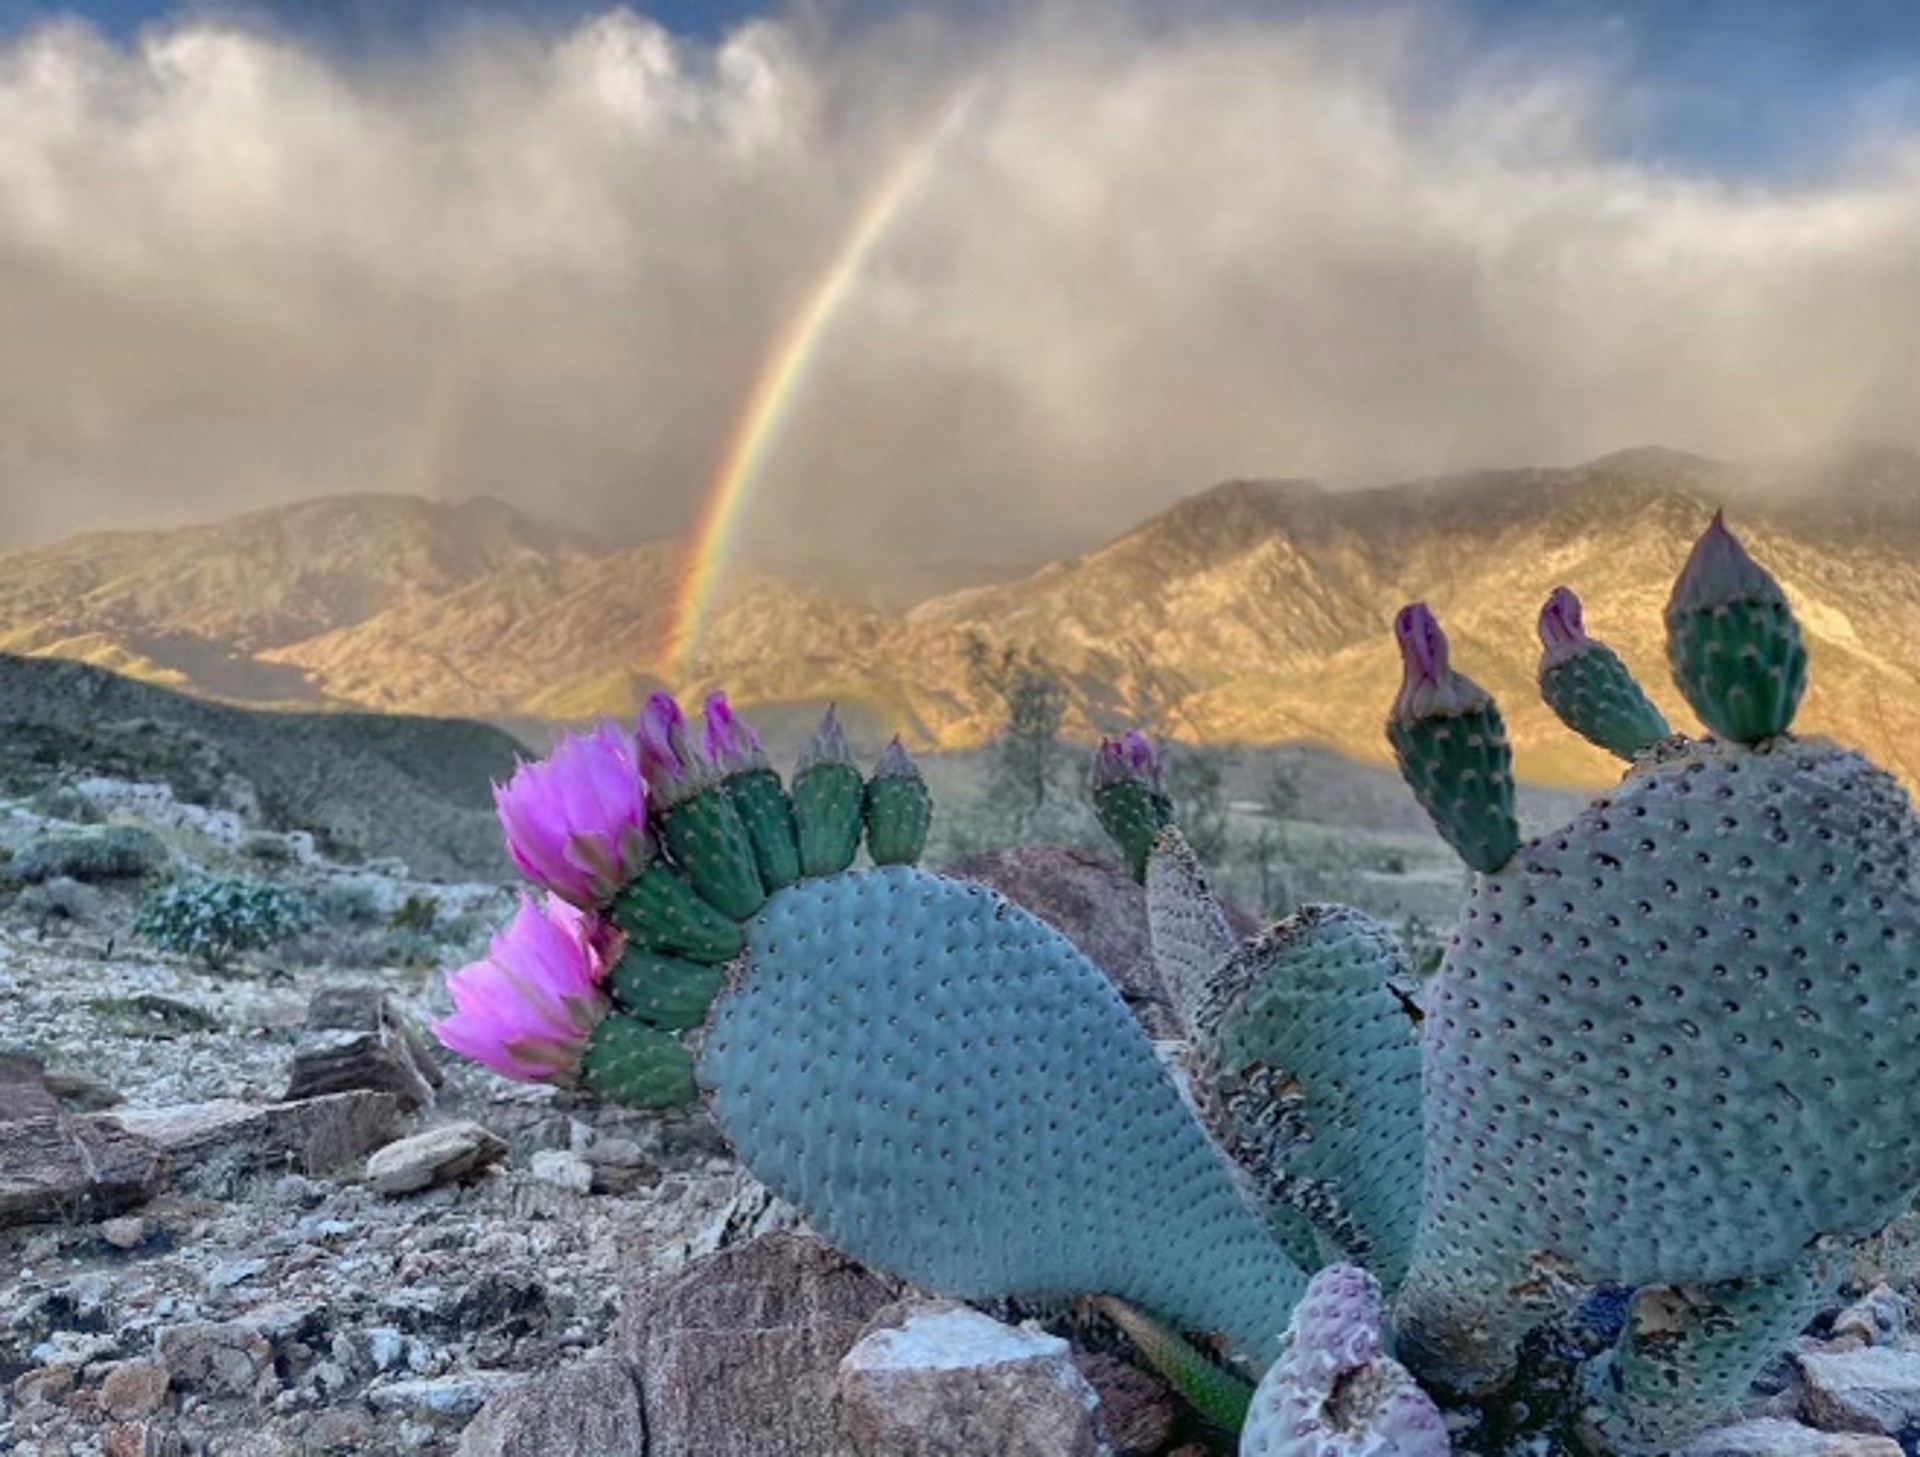 Palm Springs Rainbow by Thomas Reale